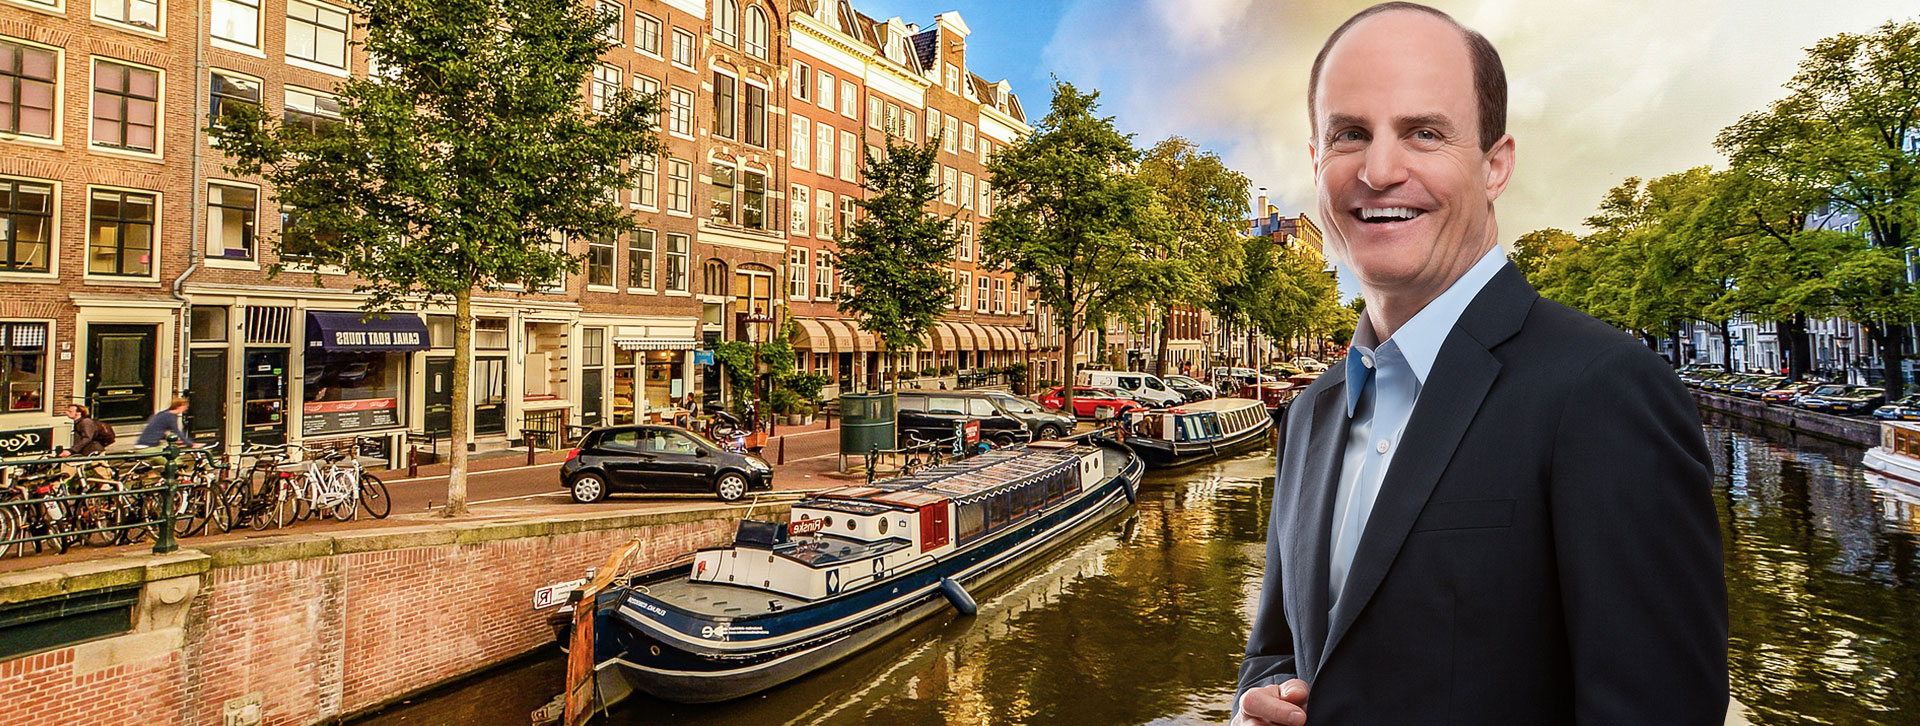 Motivational Keynote Speaker on Service Excellence in Amsterdam, Holland